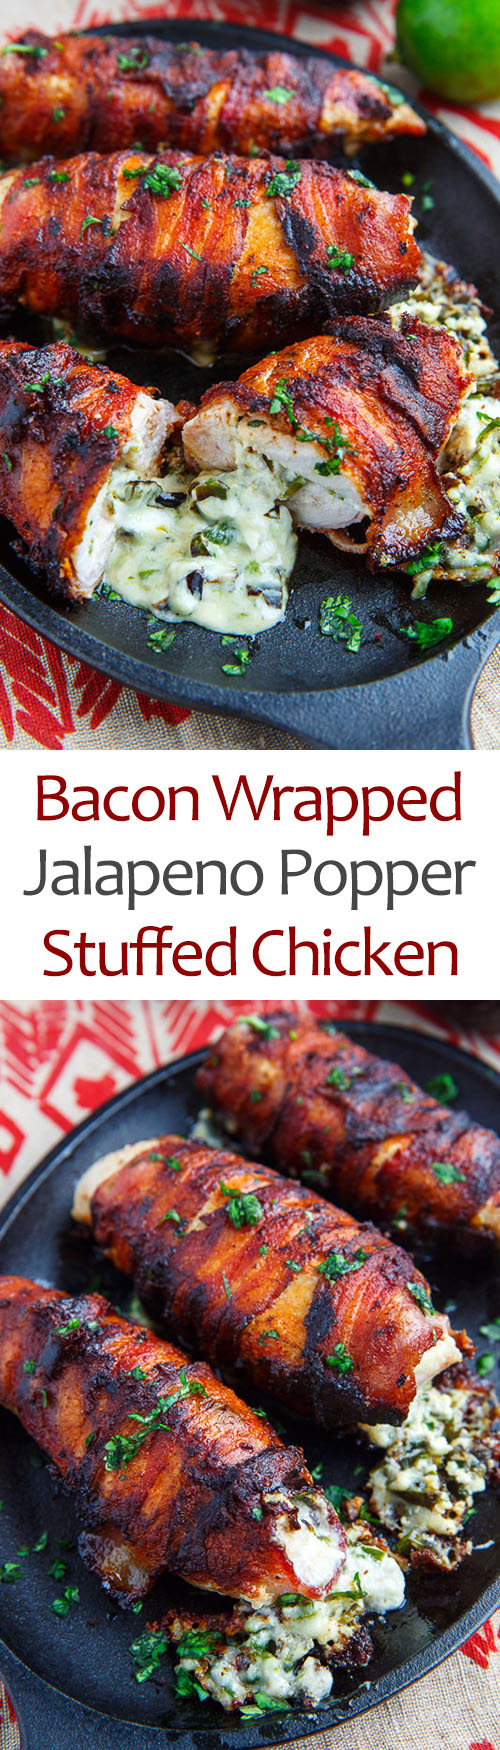 Bacon Wrapped Jalapeno Popper Stuffed Chicken